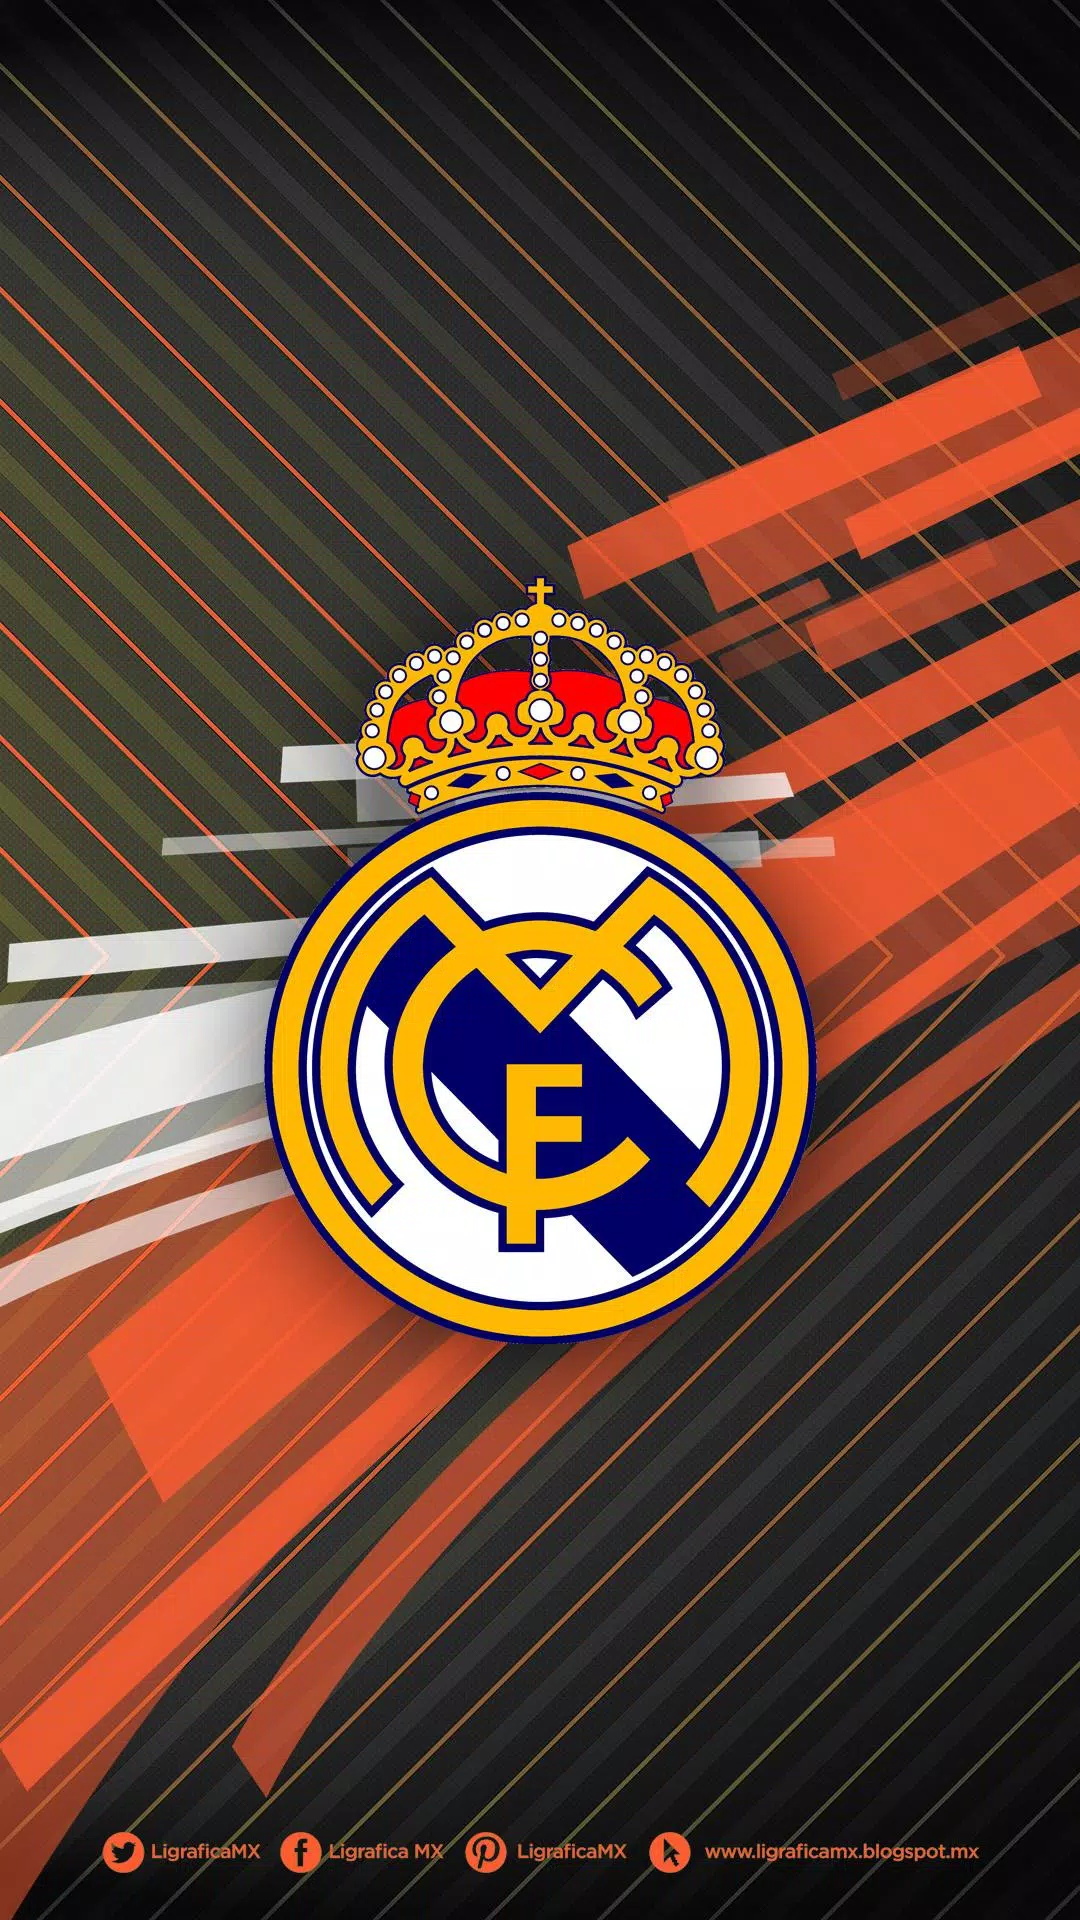 Tải xuống APK Real Madrid Wallpaper HD 2018 cho Android